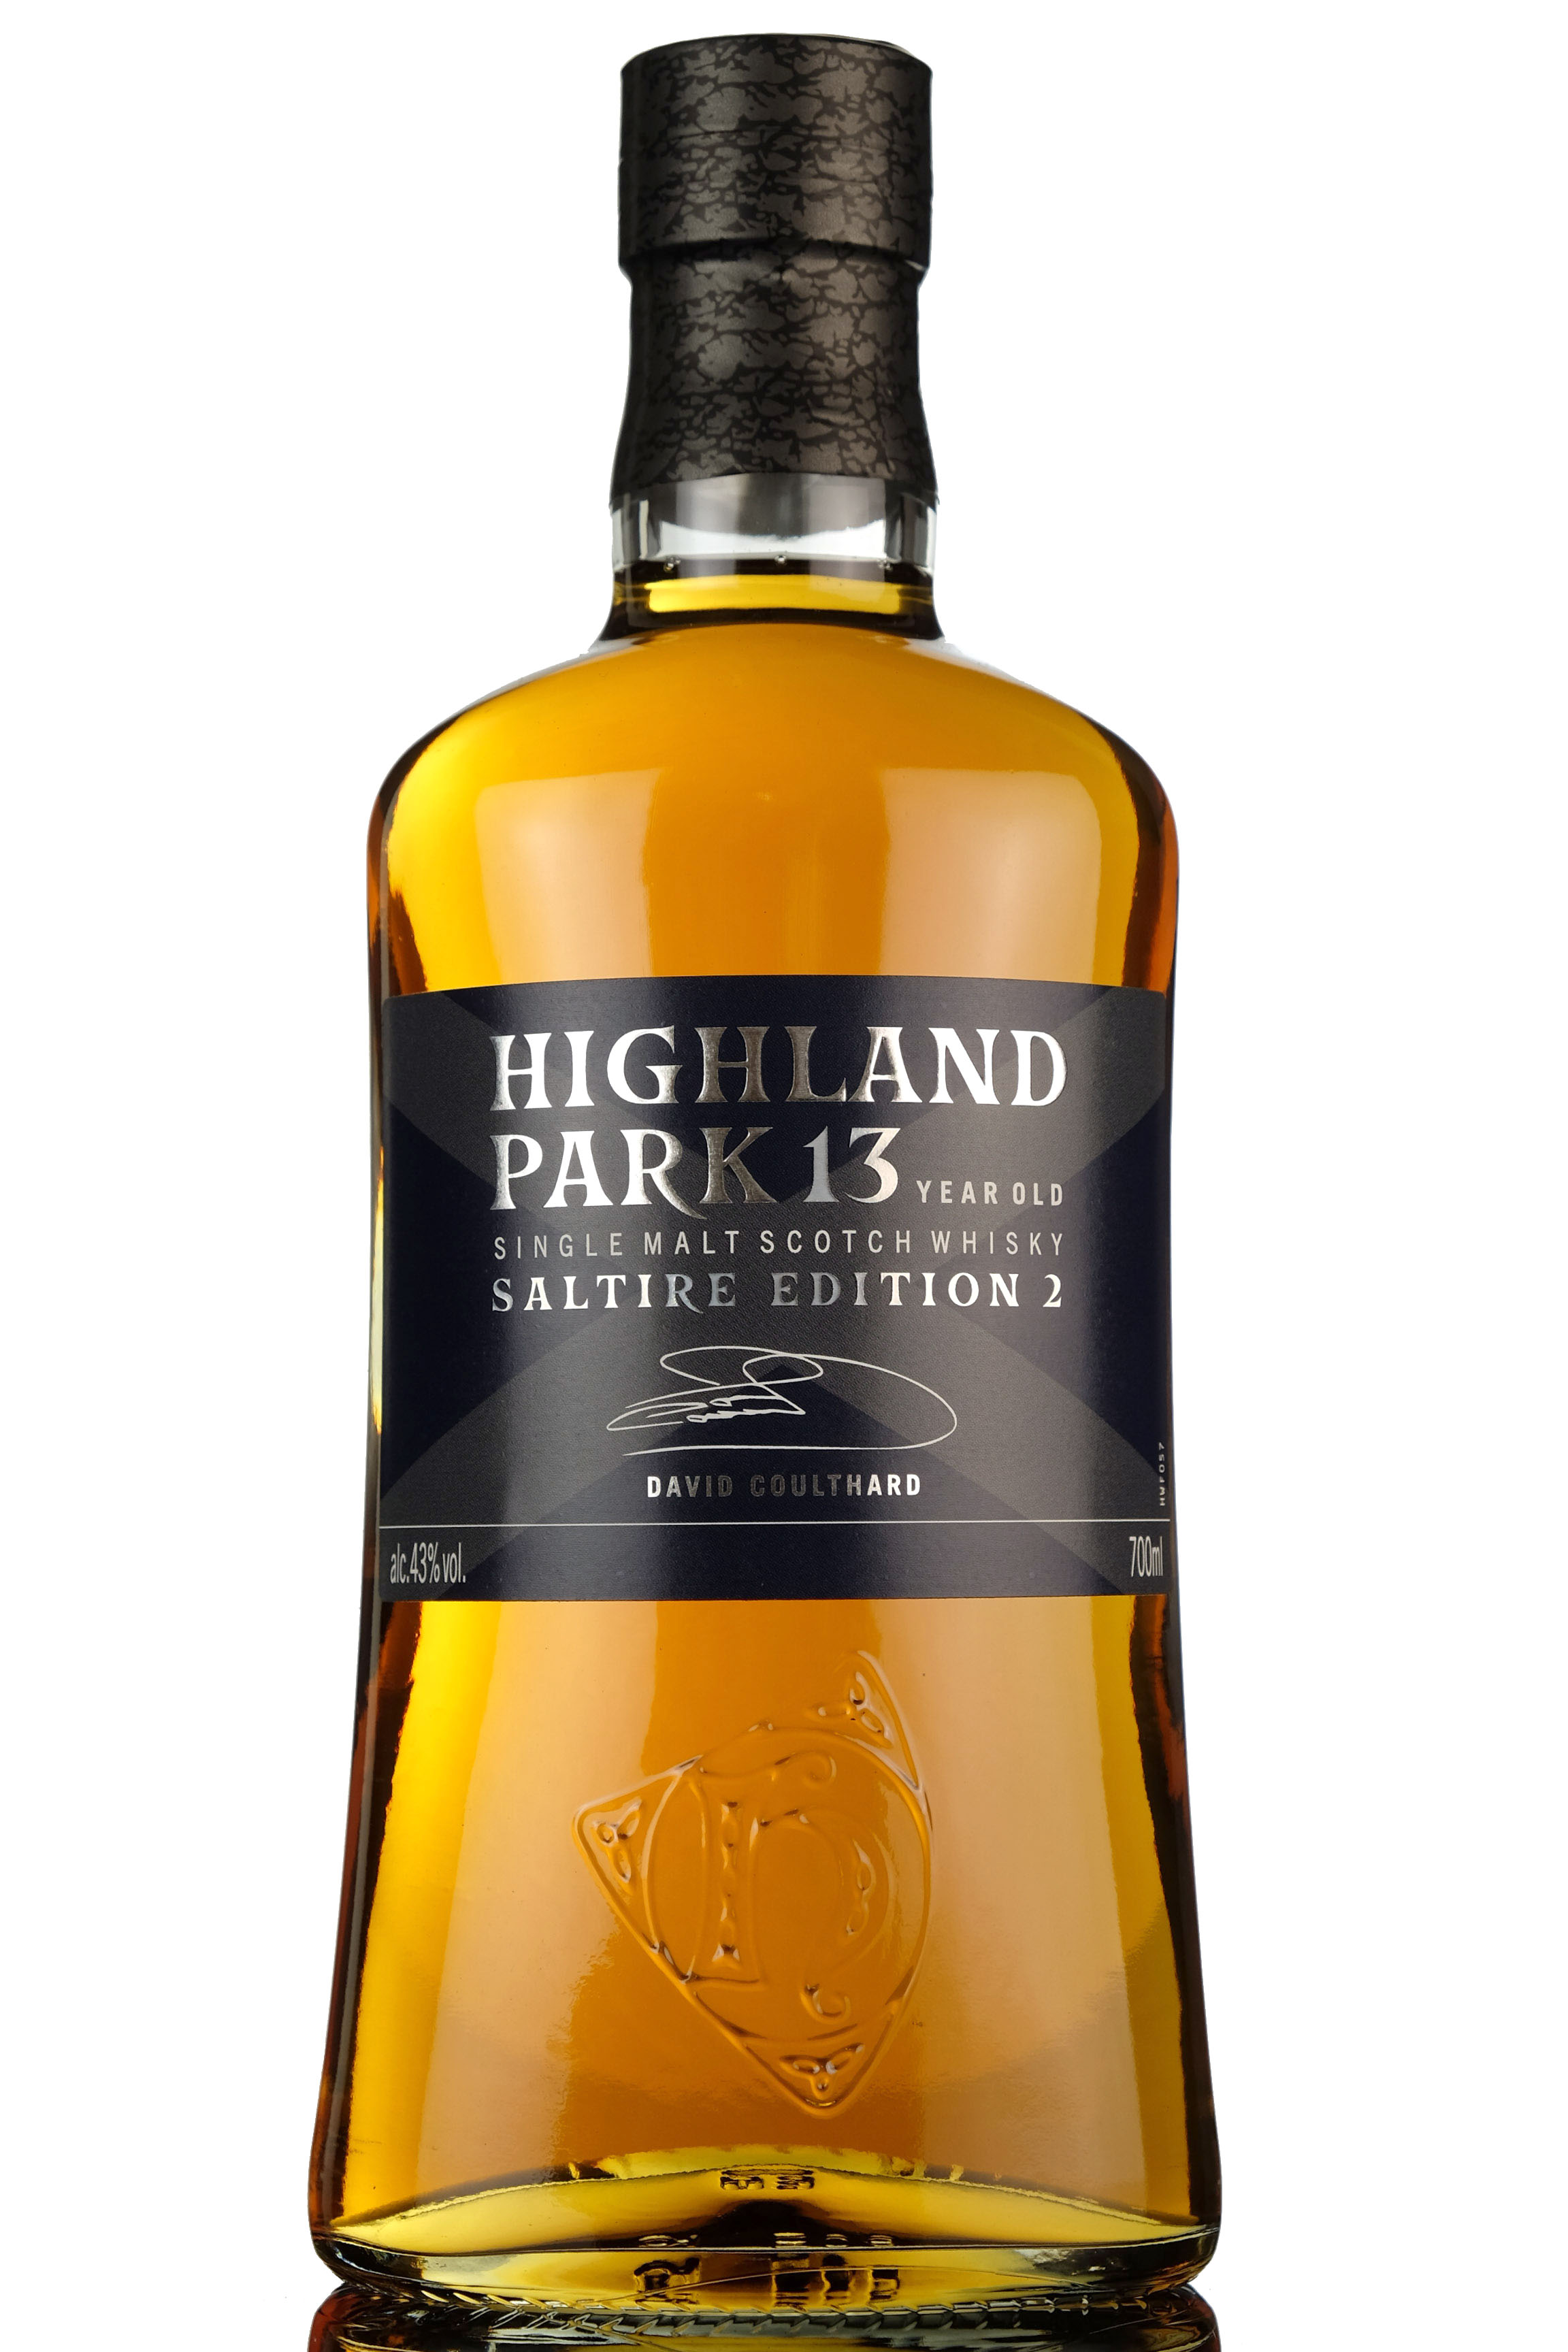 Highland Park 13 Year Old - Saltire Edition 2